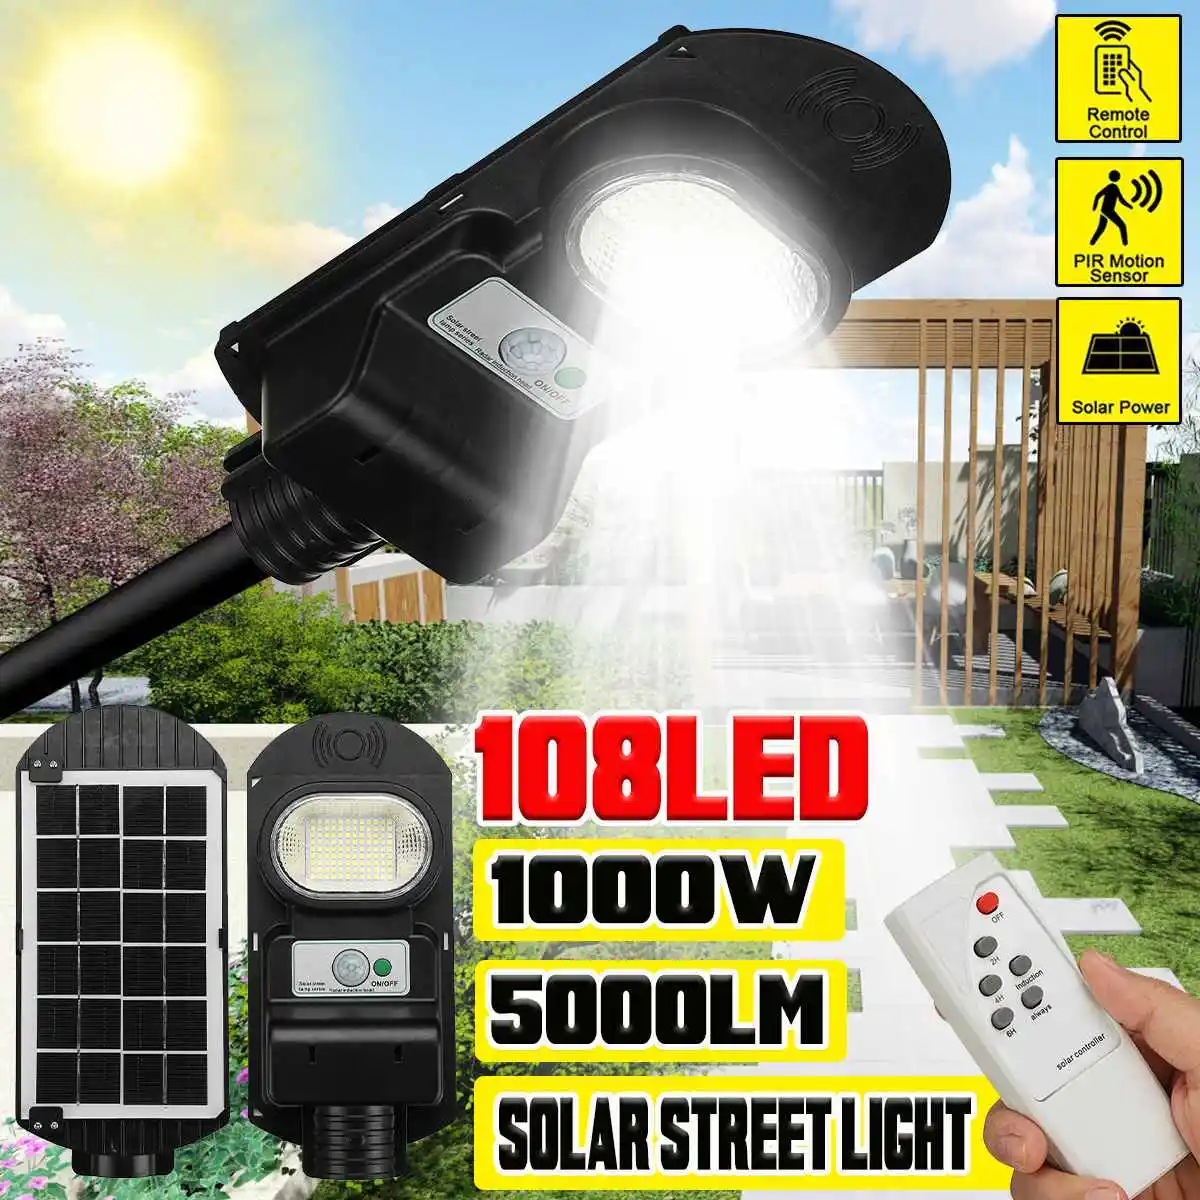 

1000W 5000LM Remote Control Solar PIR Motion Sensor LED Wall Street Light Waterproof for Garden Courtyard Pathway Street Lamp